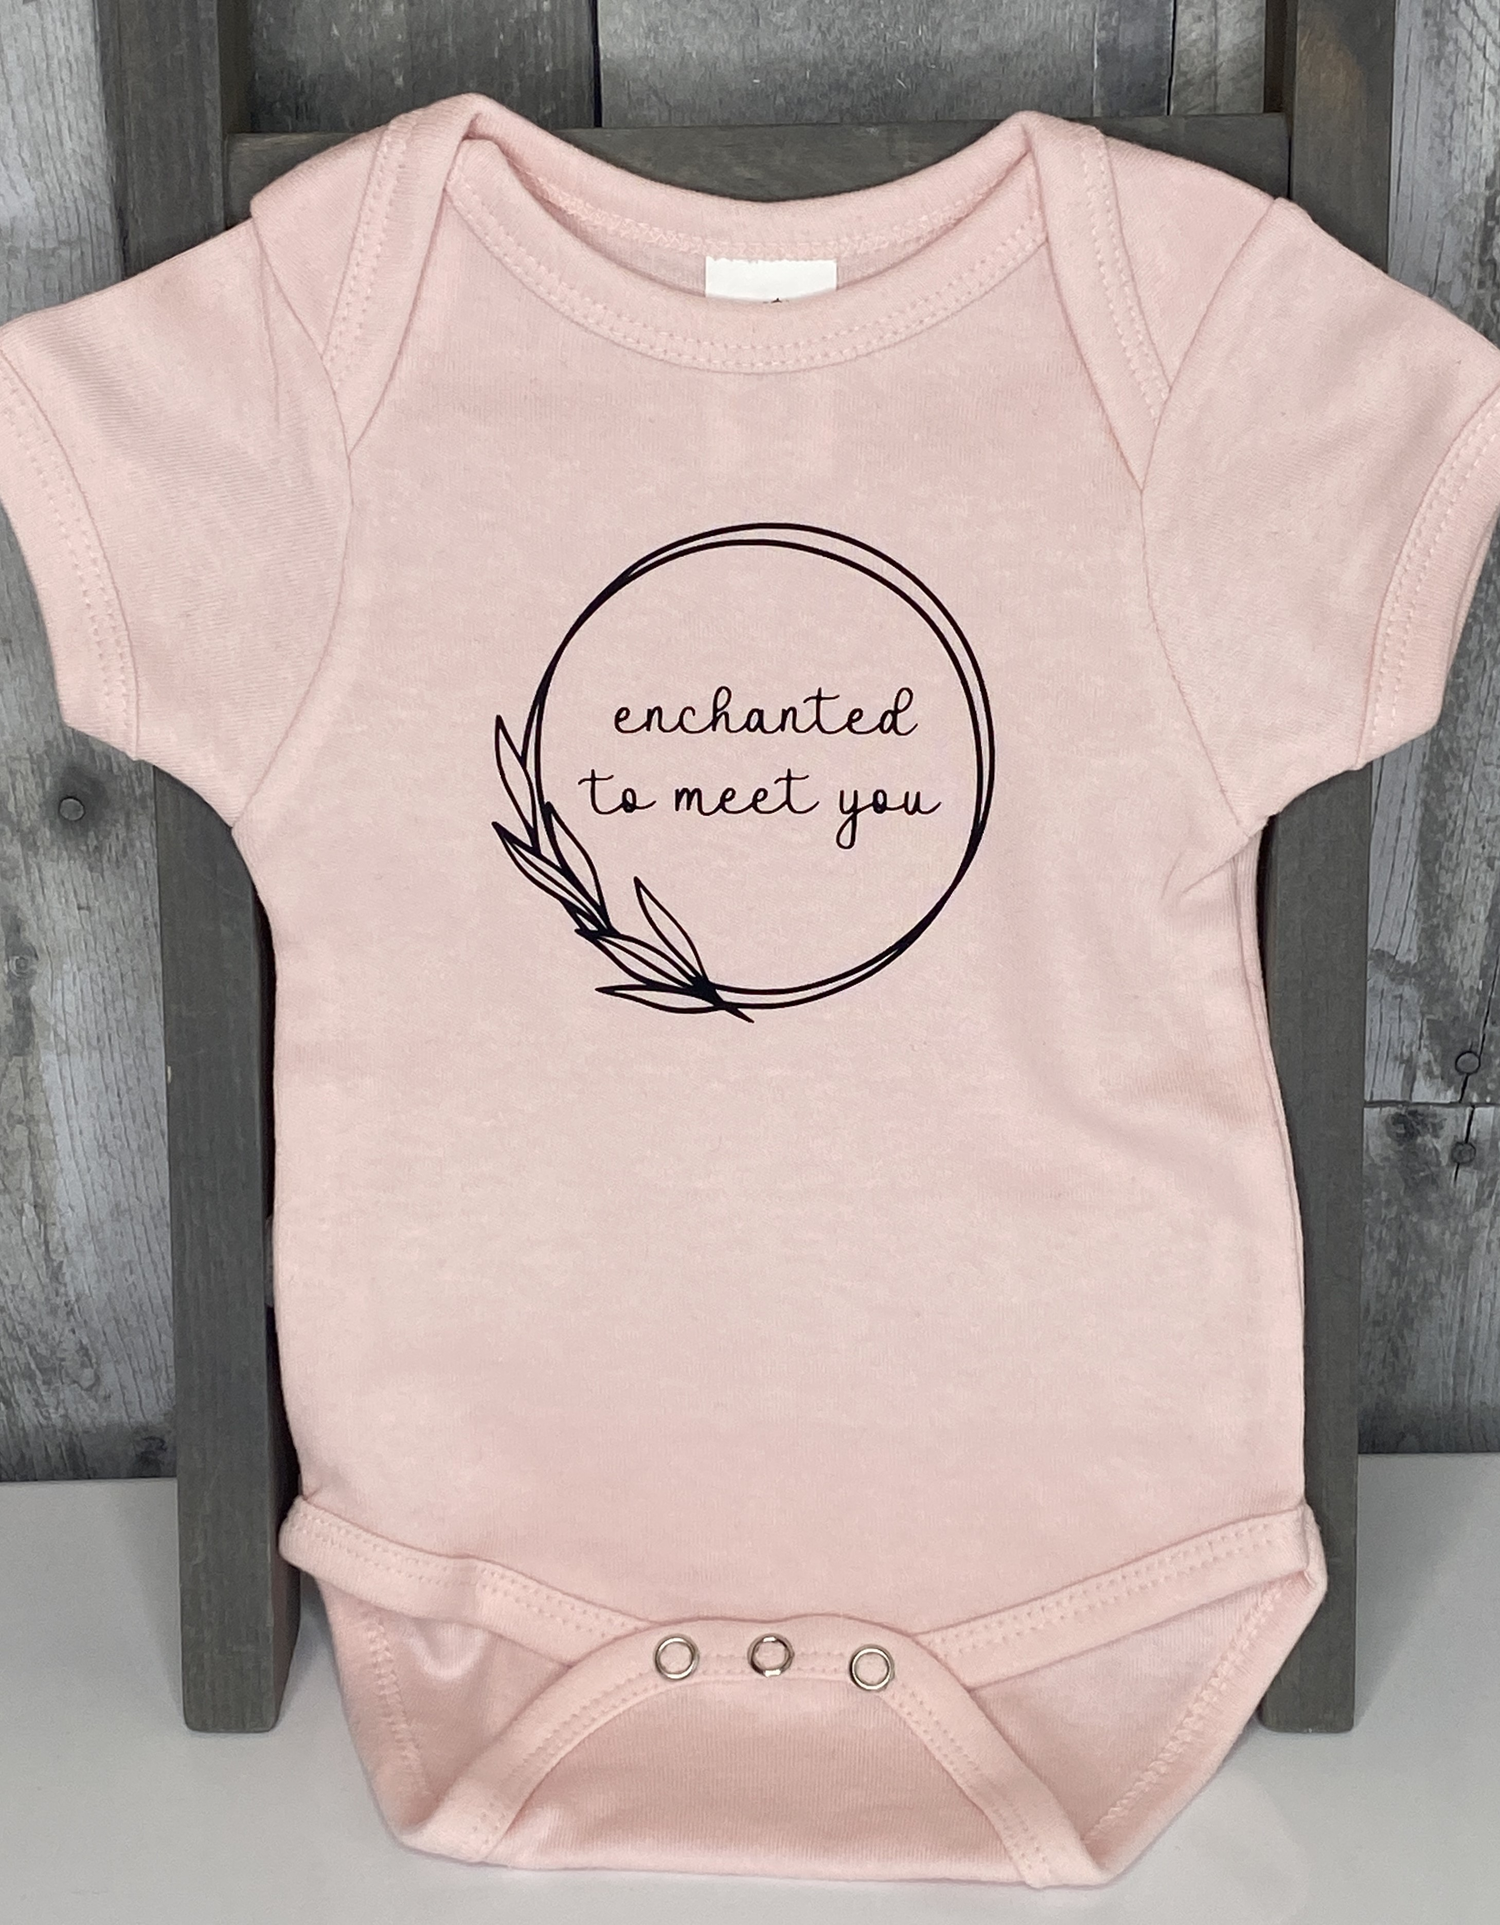 enchanted to meet you infant bodysuit